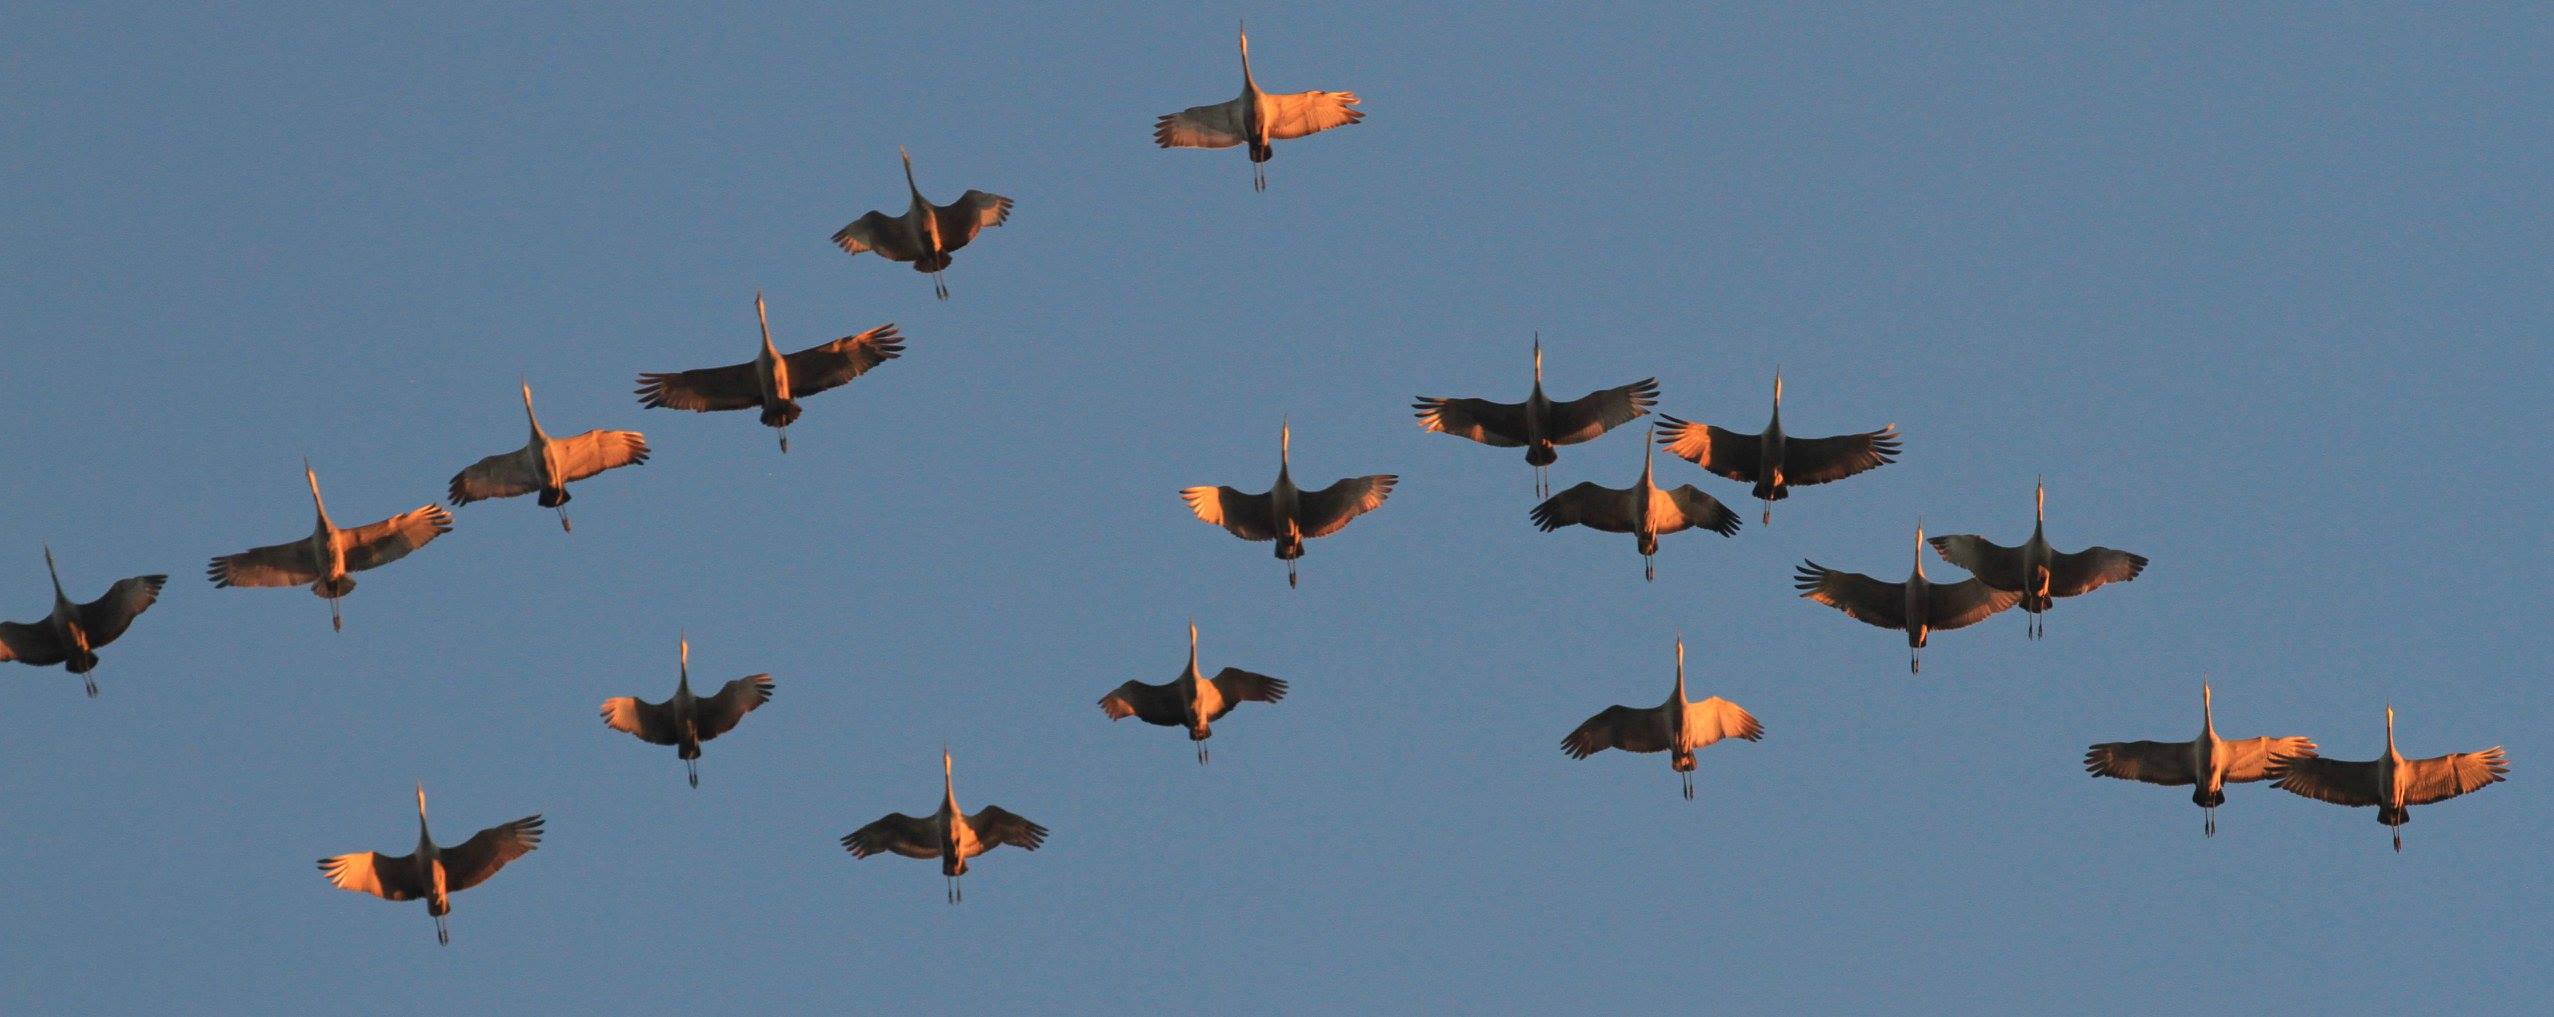 crane migration